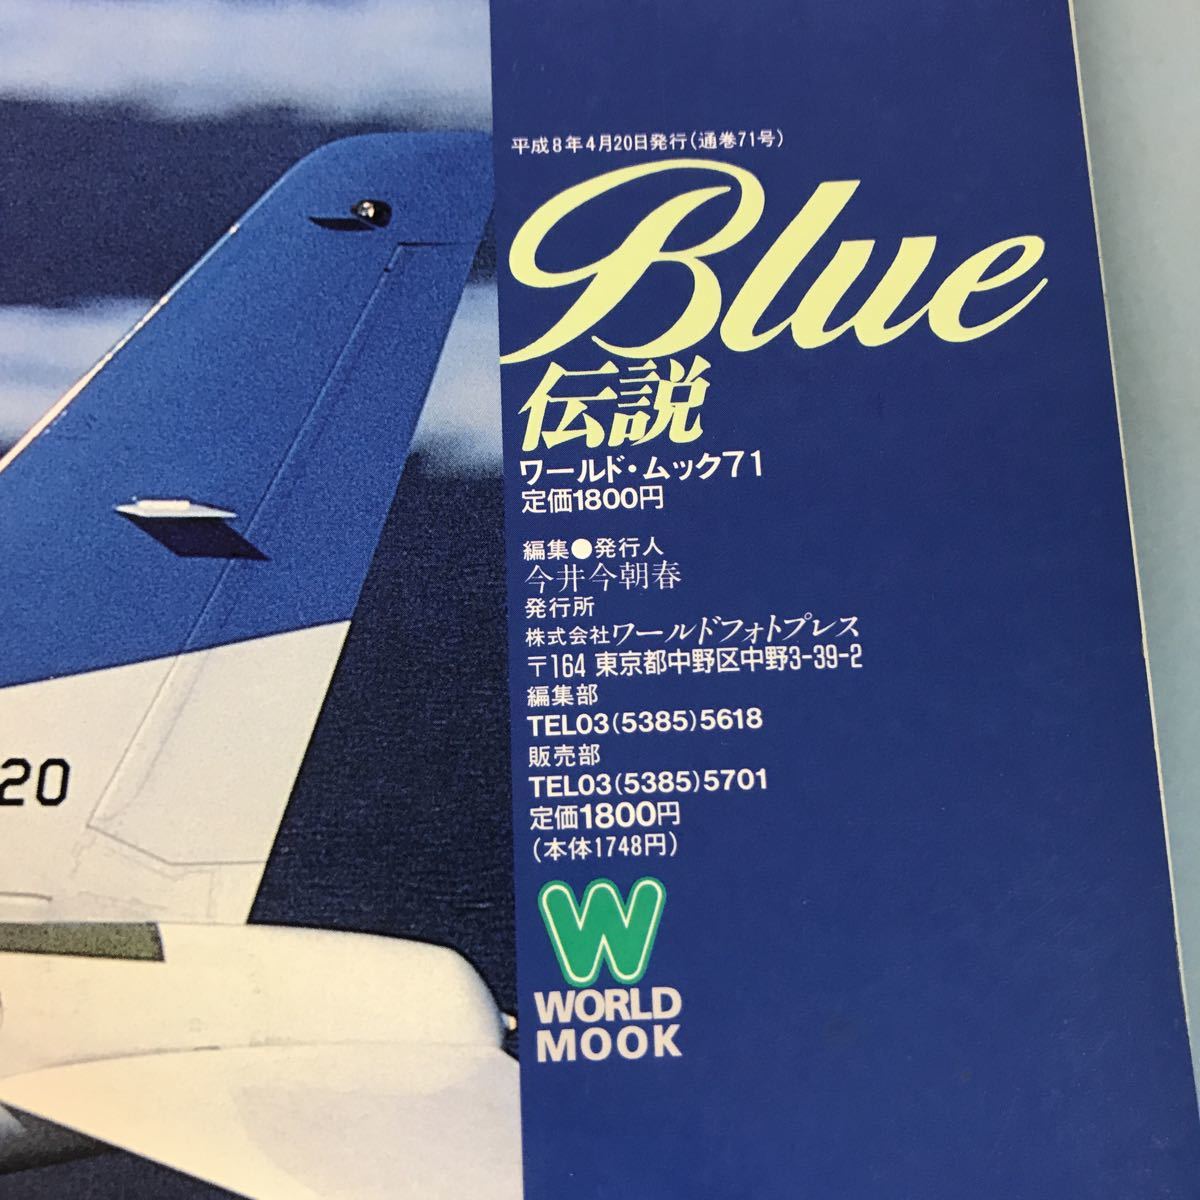 B65-129 WORLD MOOK 71 BLUE伝説 航空自衛隊アクロバットチーム ブルーインパルス グラフィック 株式会社 ワールドフォトプレスの画像10